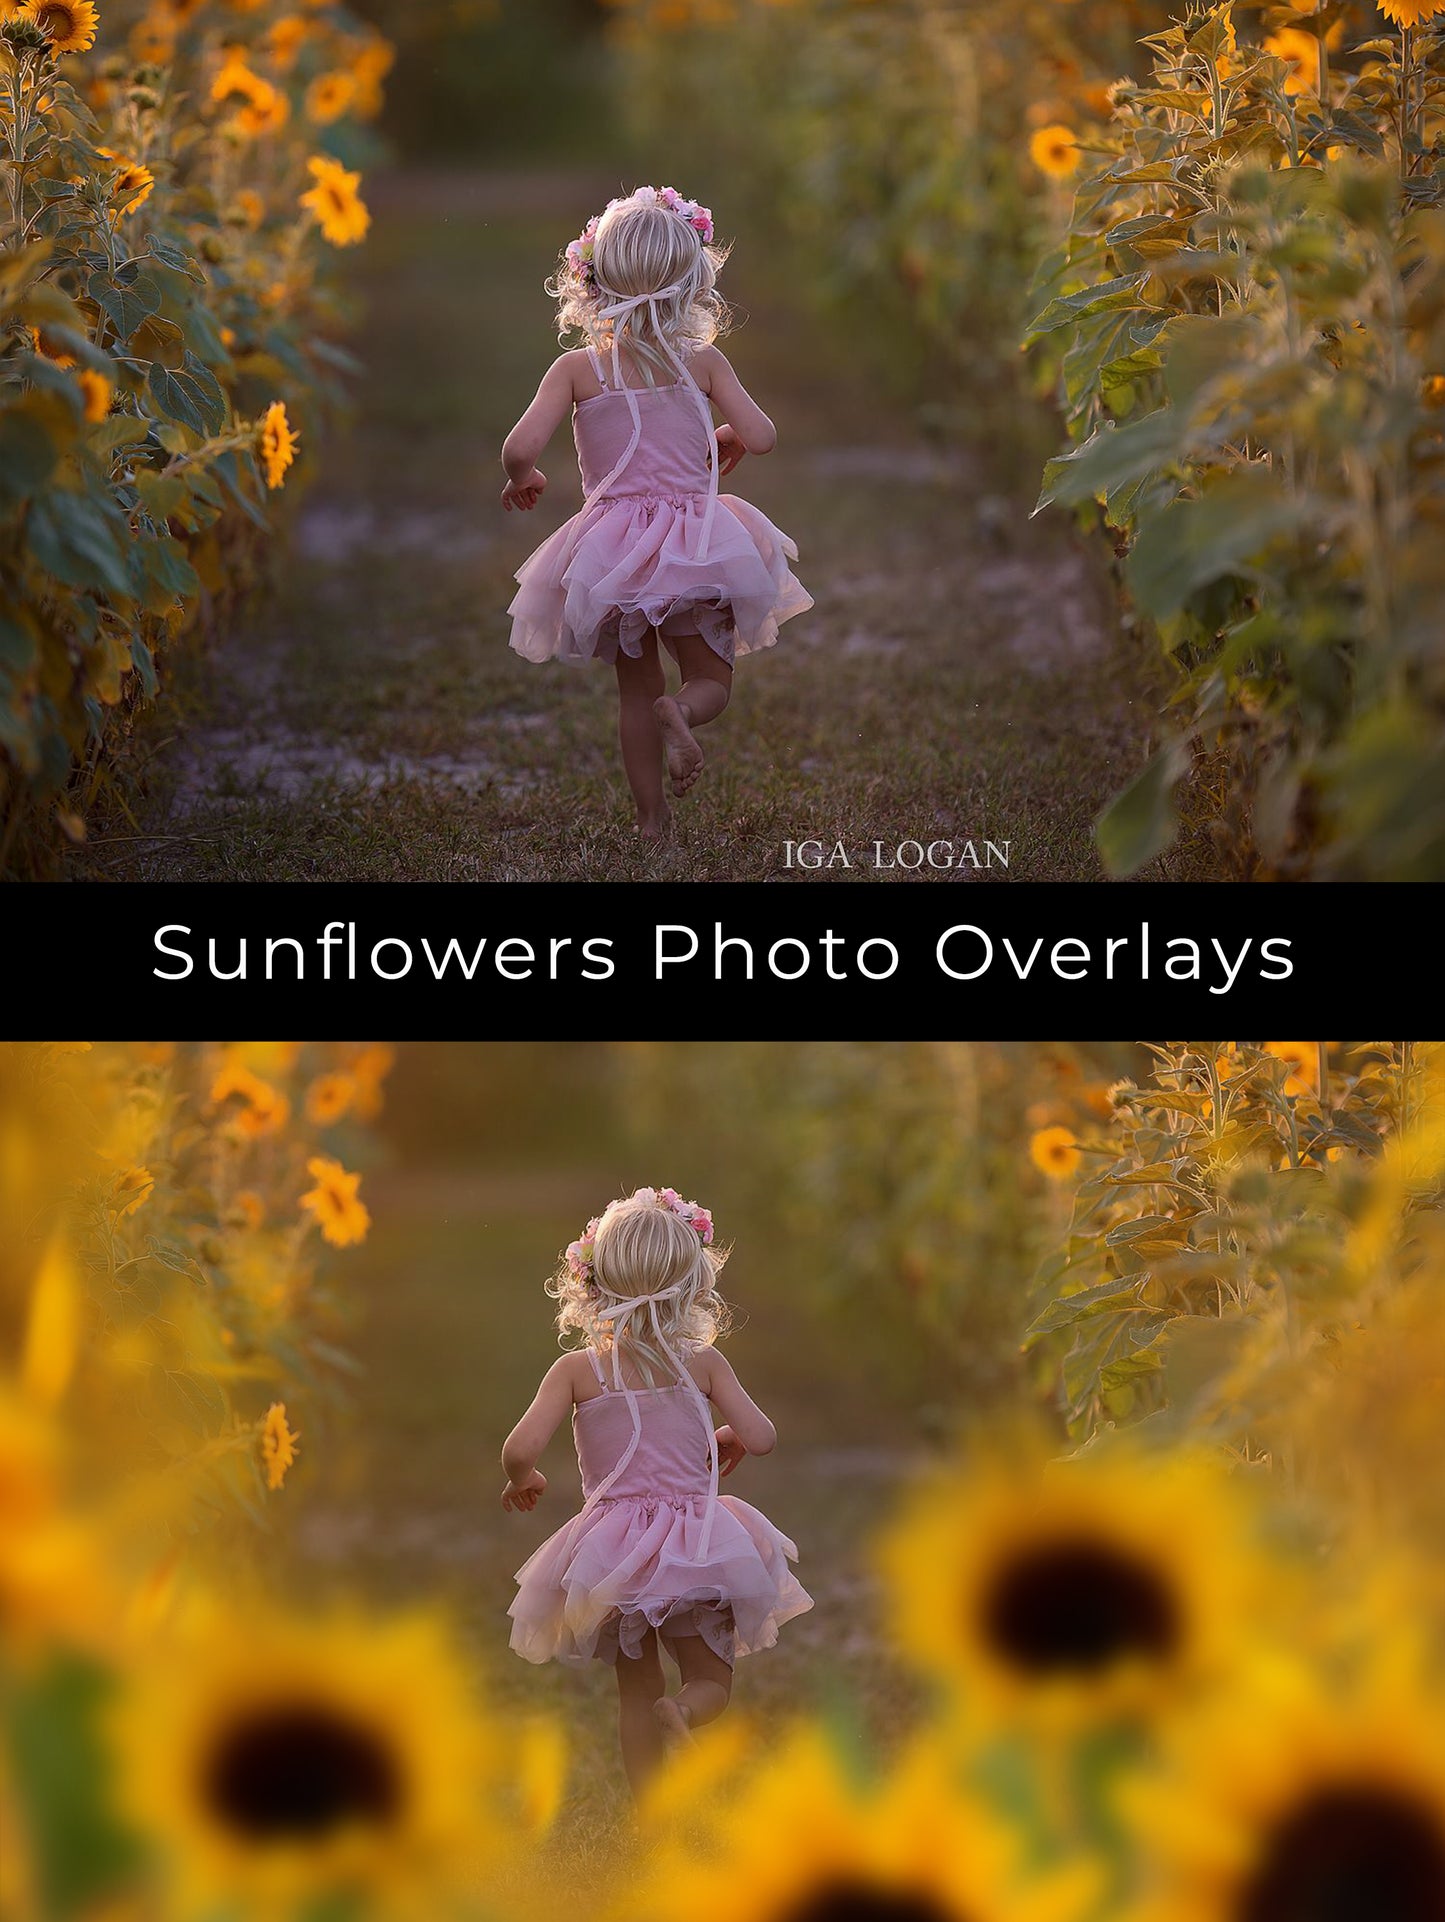 Painted Sunflowers Photo Overlays